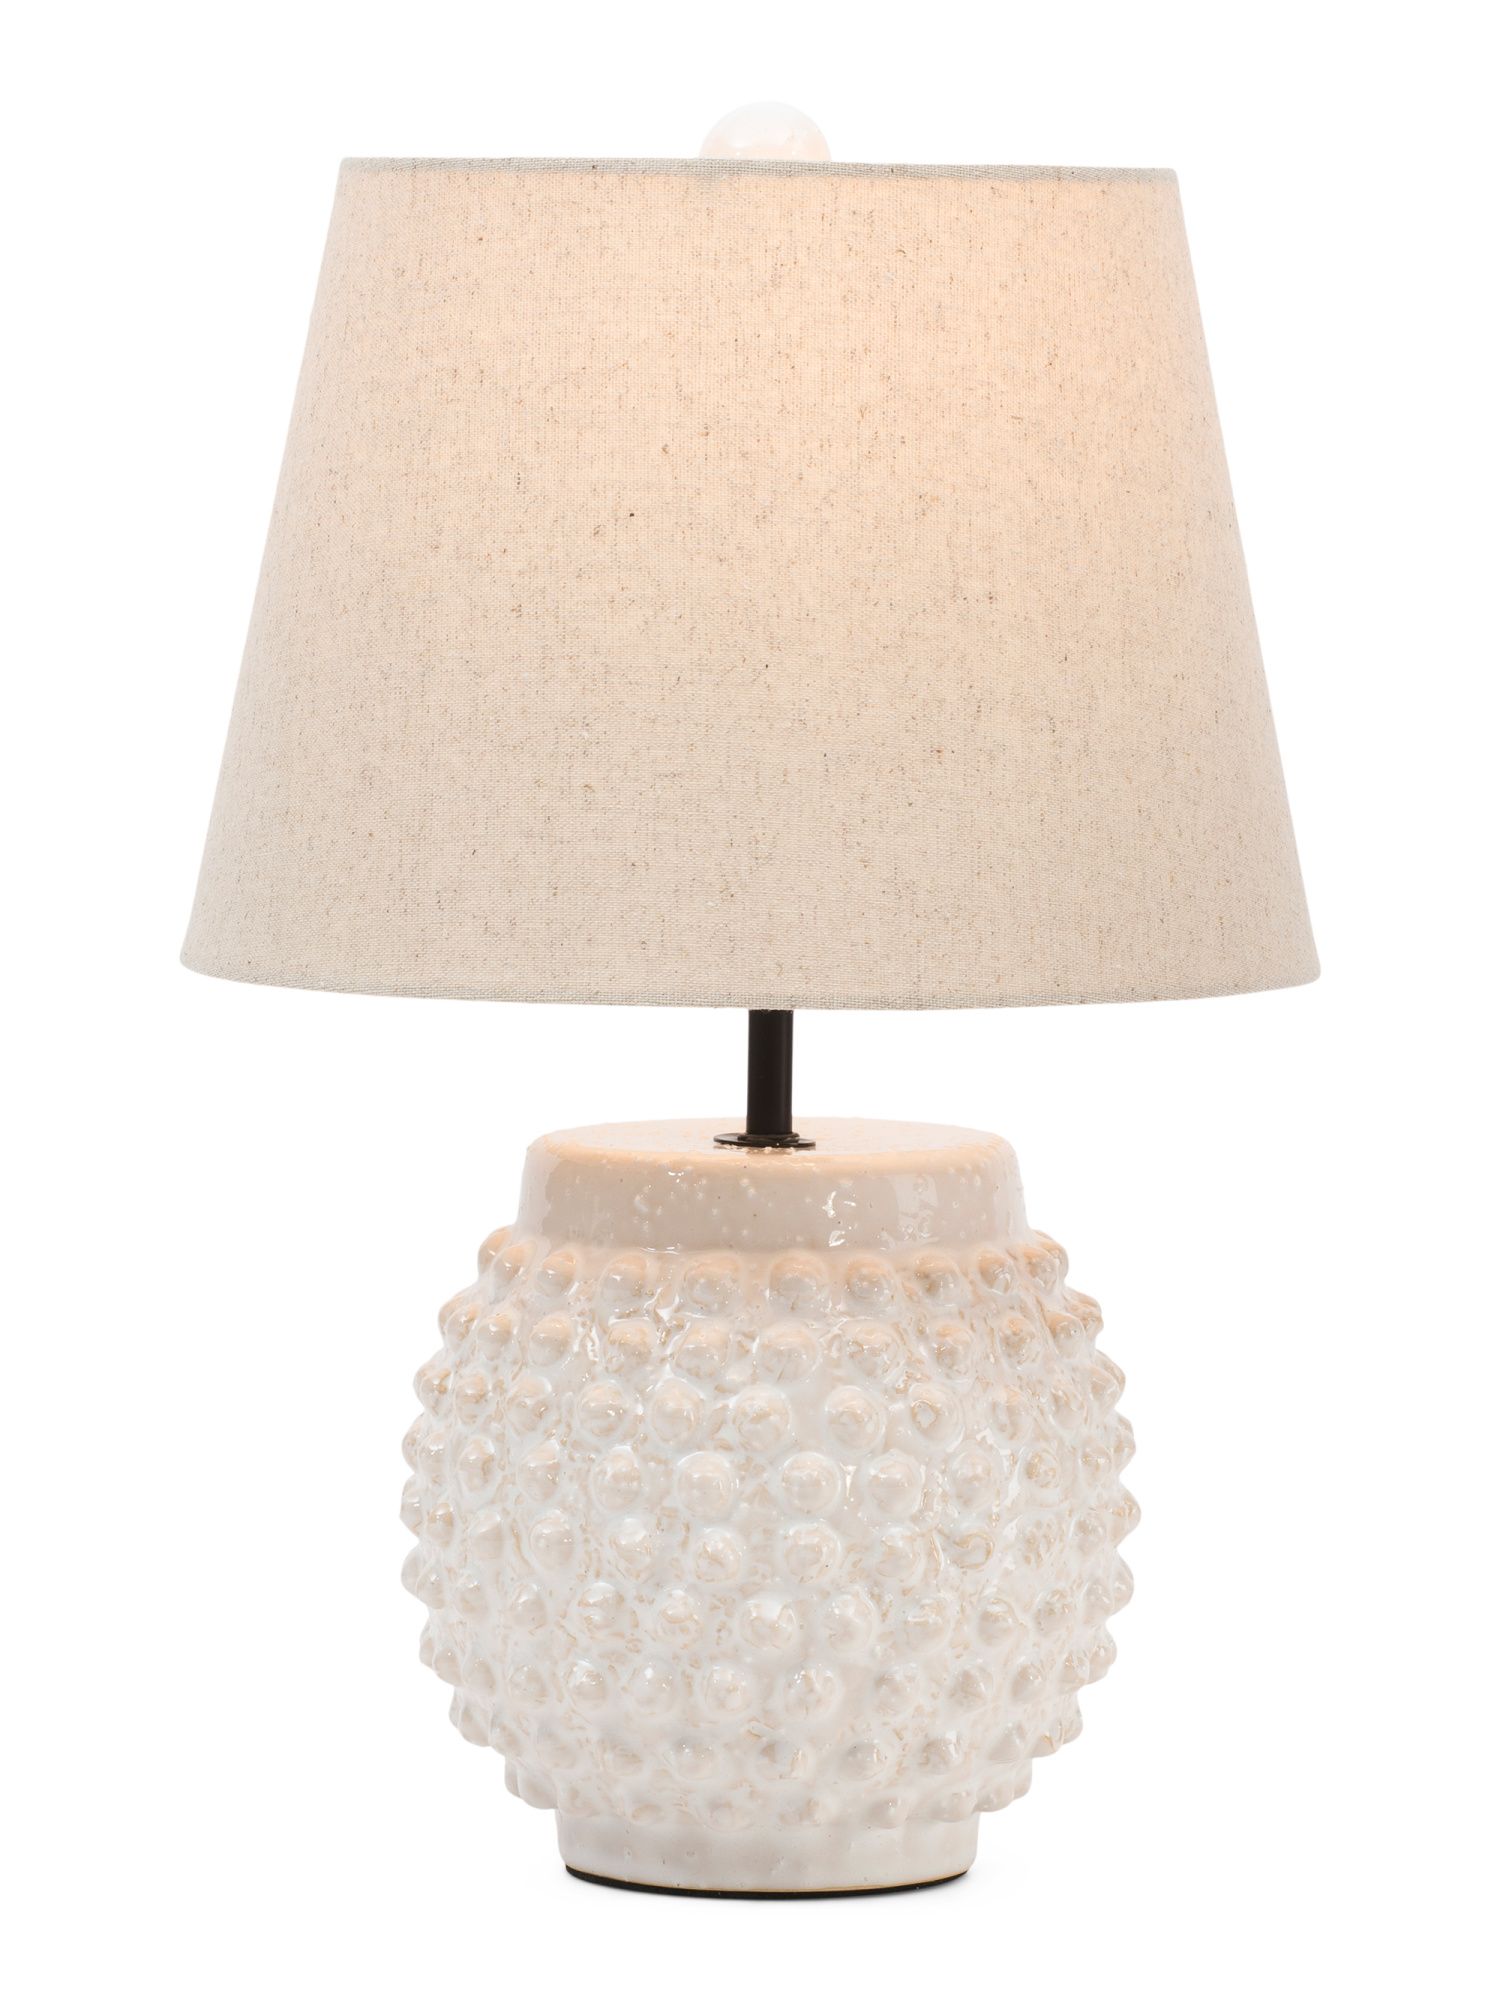 16in Dot Textured Ceramic Table Lamp | TJ Maxx